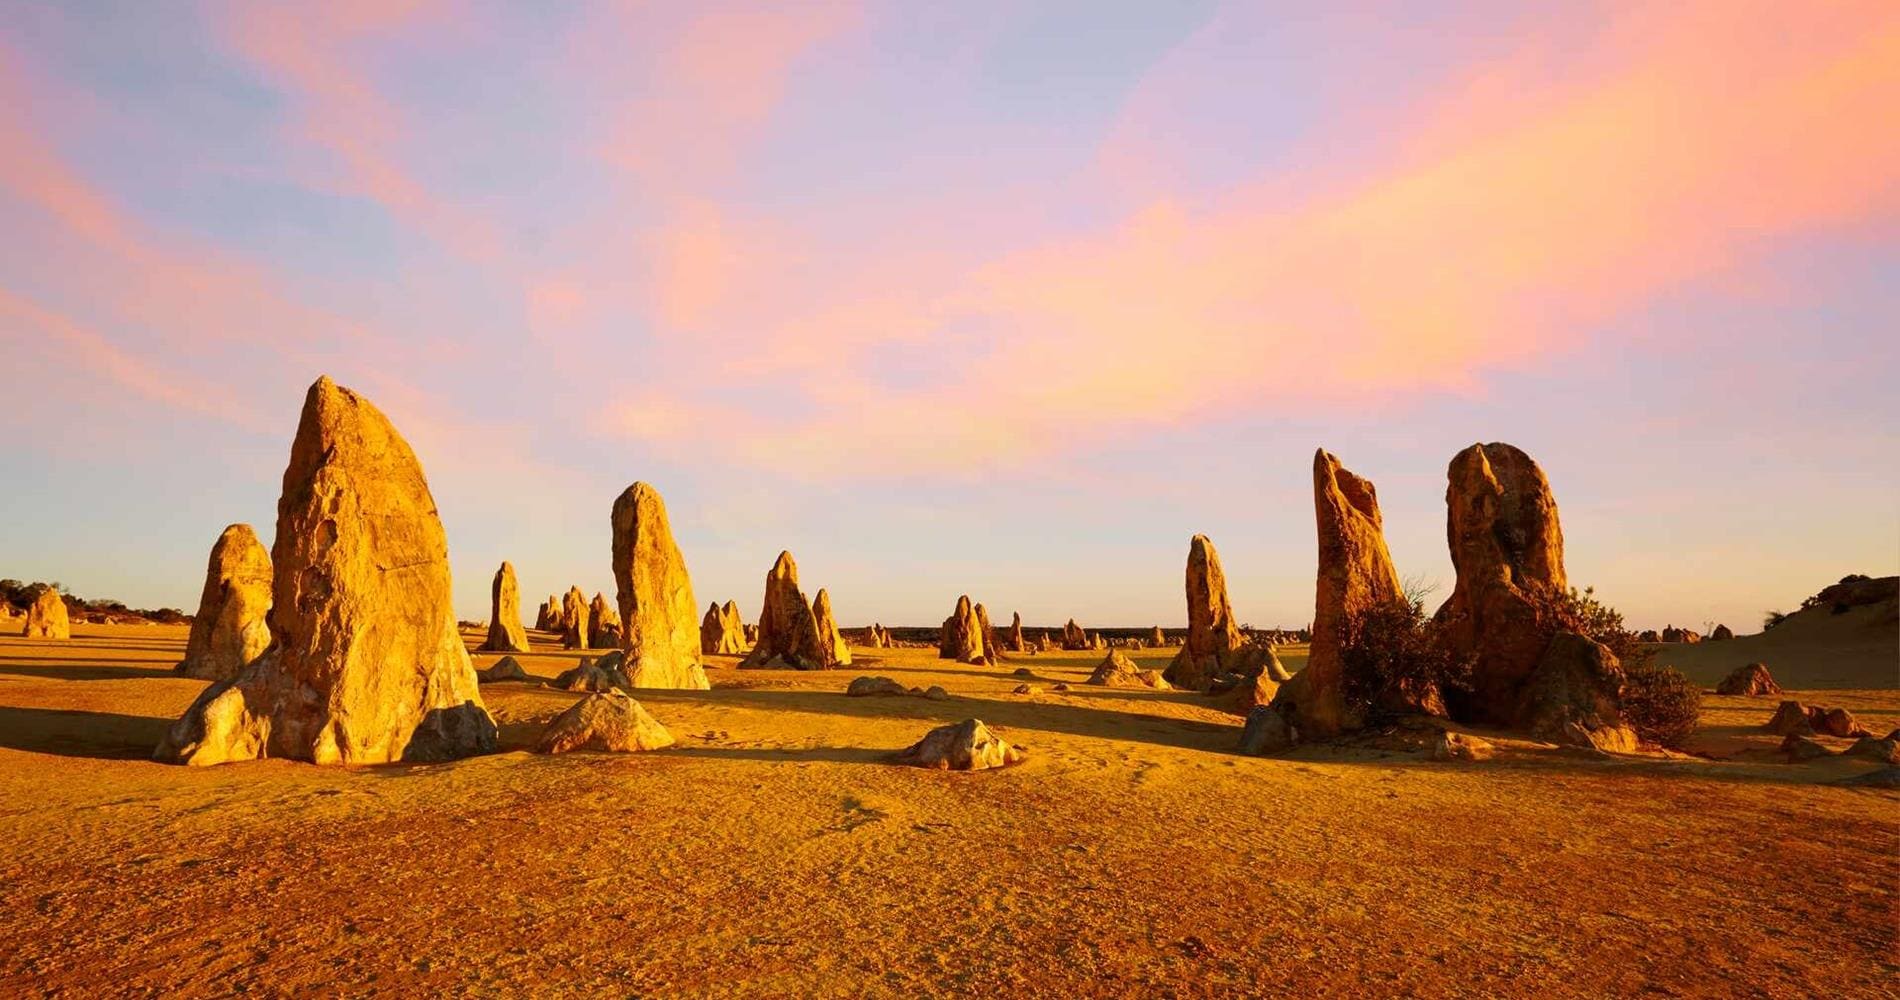 Sunset across a barren landscape with sandstone mounds, Western Australia